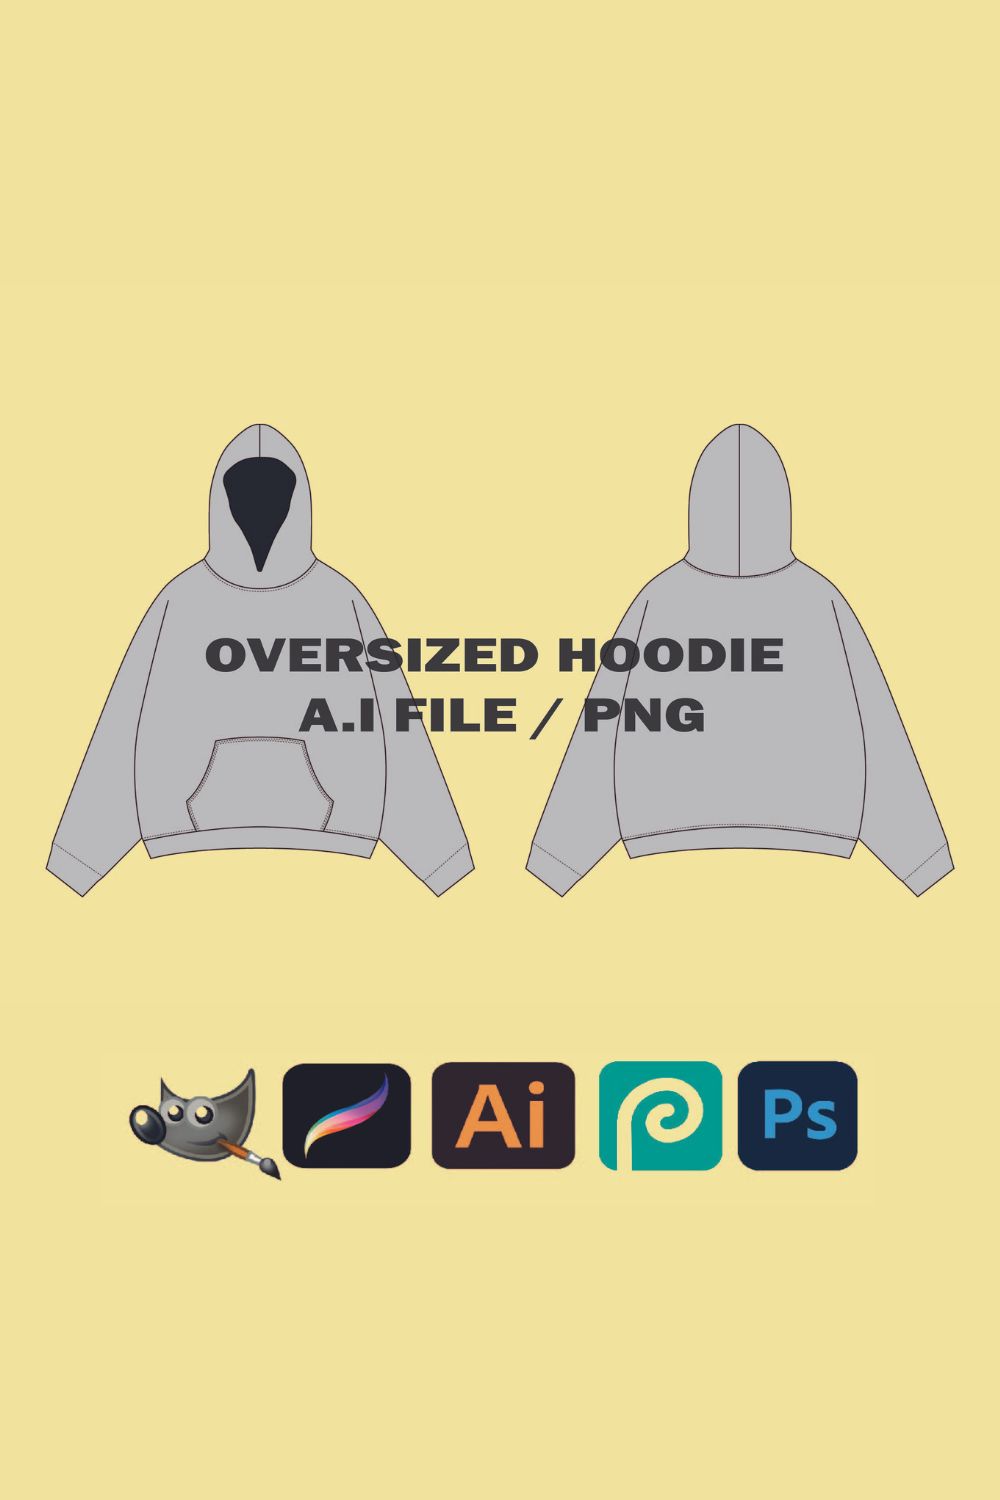 Streetwear Hoodie Sweatshirt Mockup Vector Adobe Illustrator, Procreate, PNG, Clothing Template Sketch Tech Pack - Download pinterest preview image.